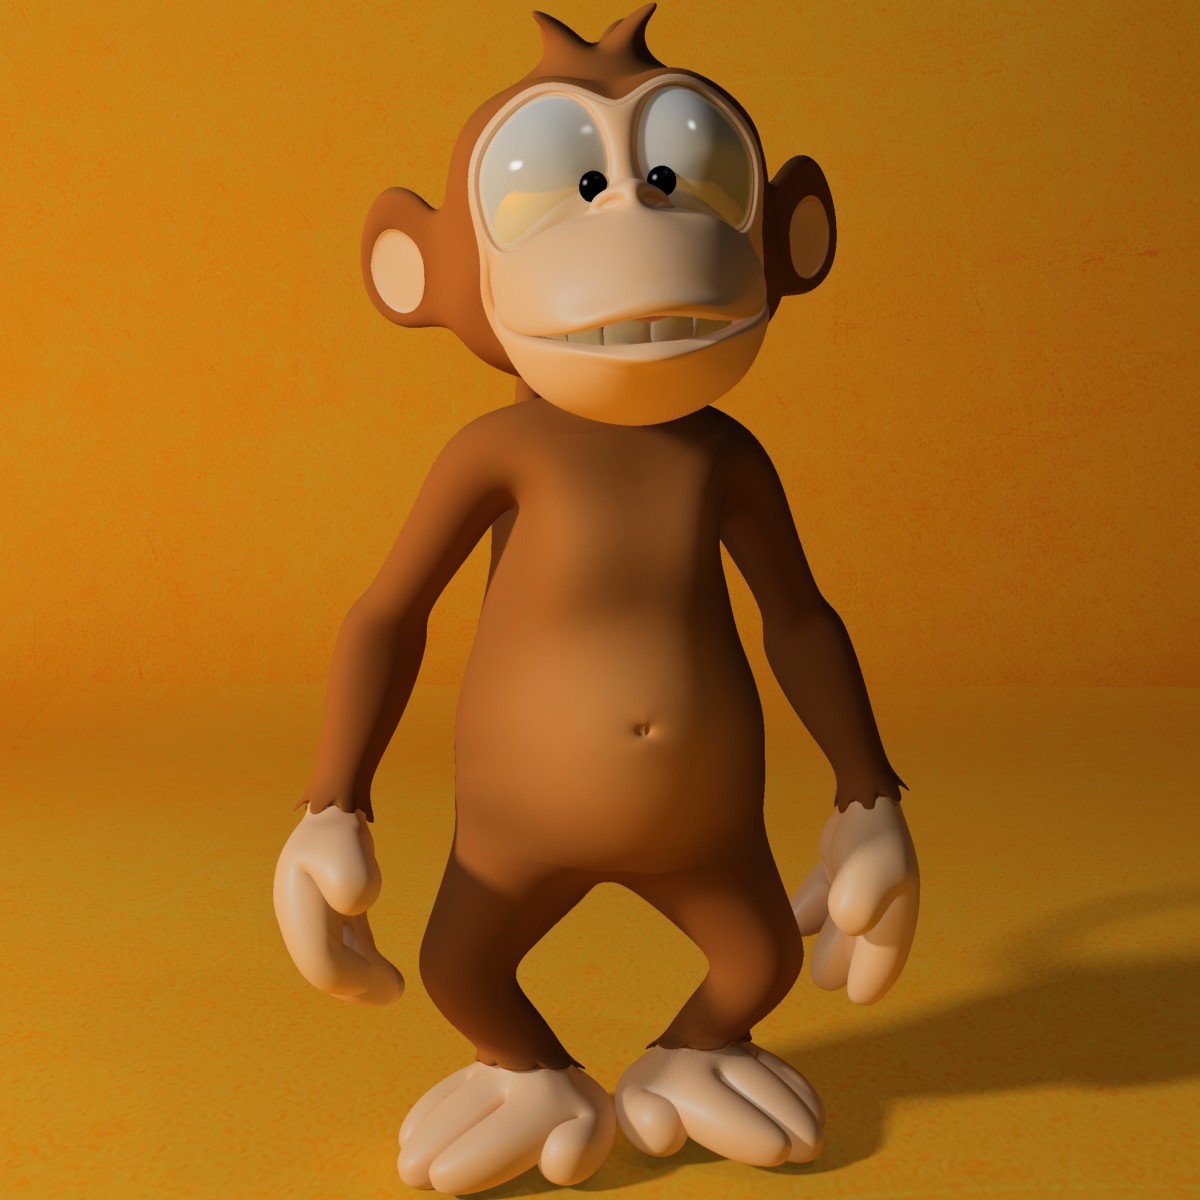 ArtStation - Cartoon monkey RIGGED | Resources